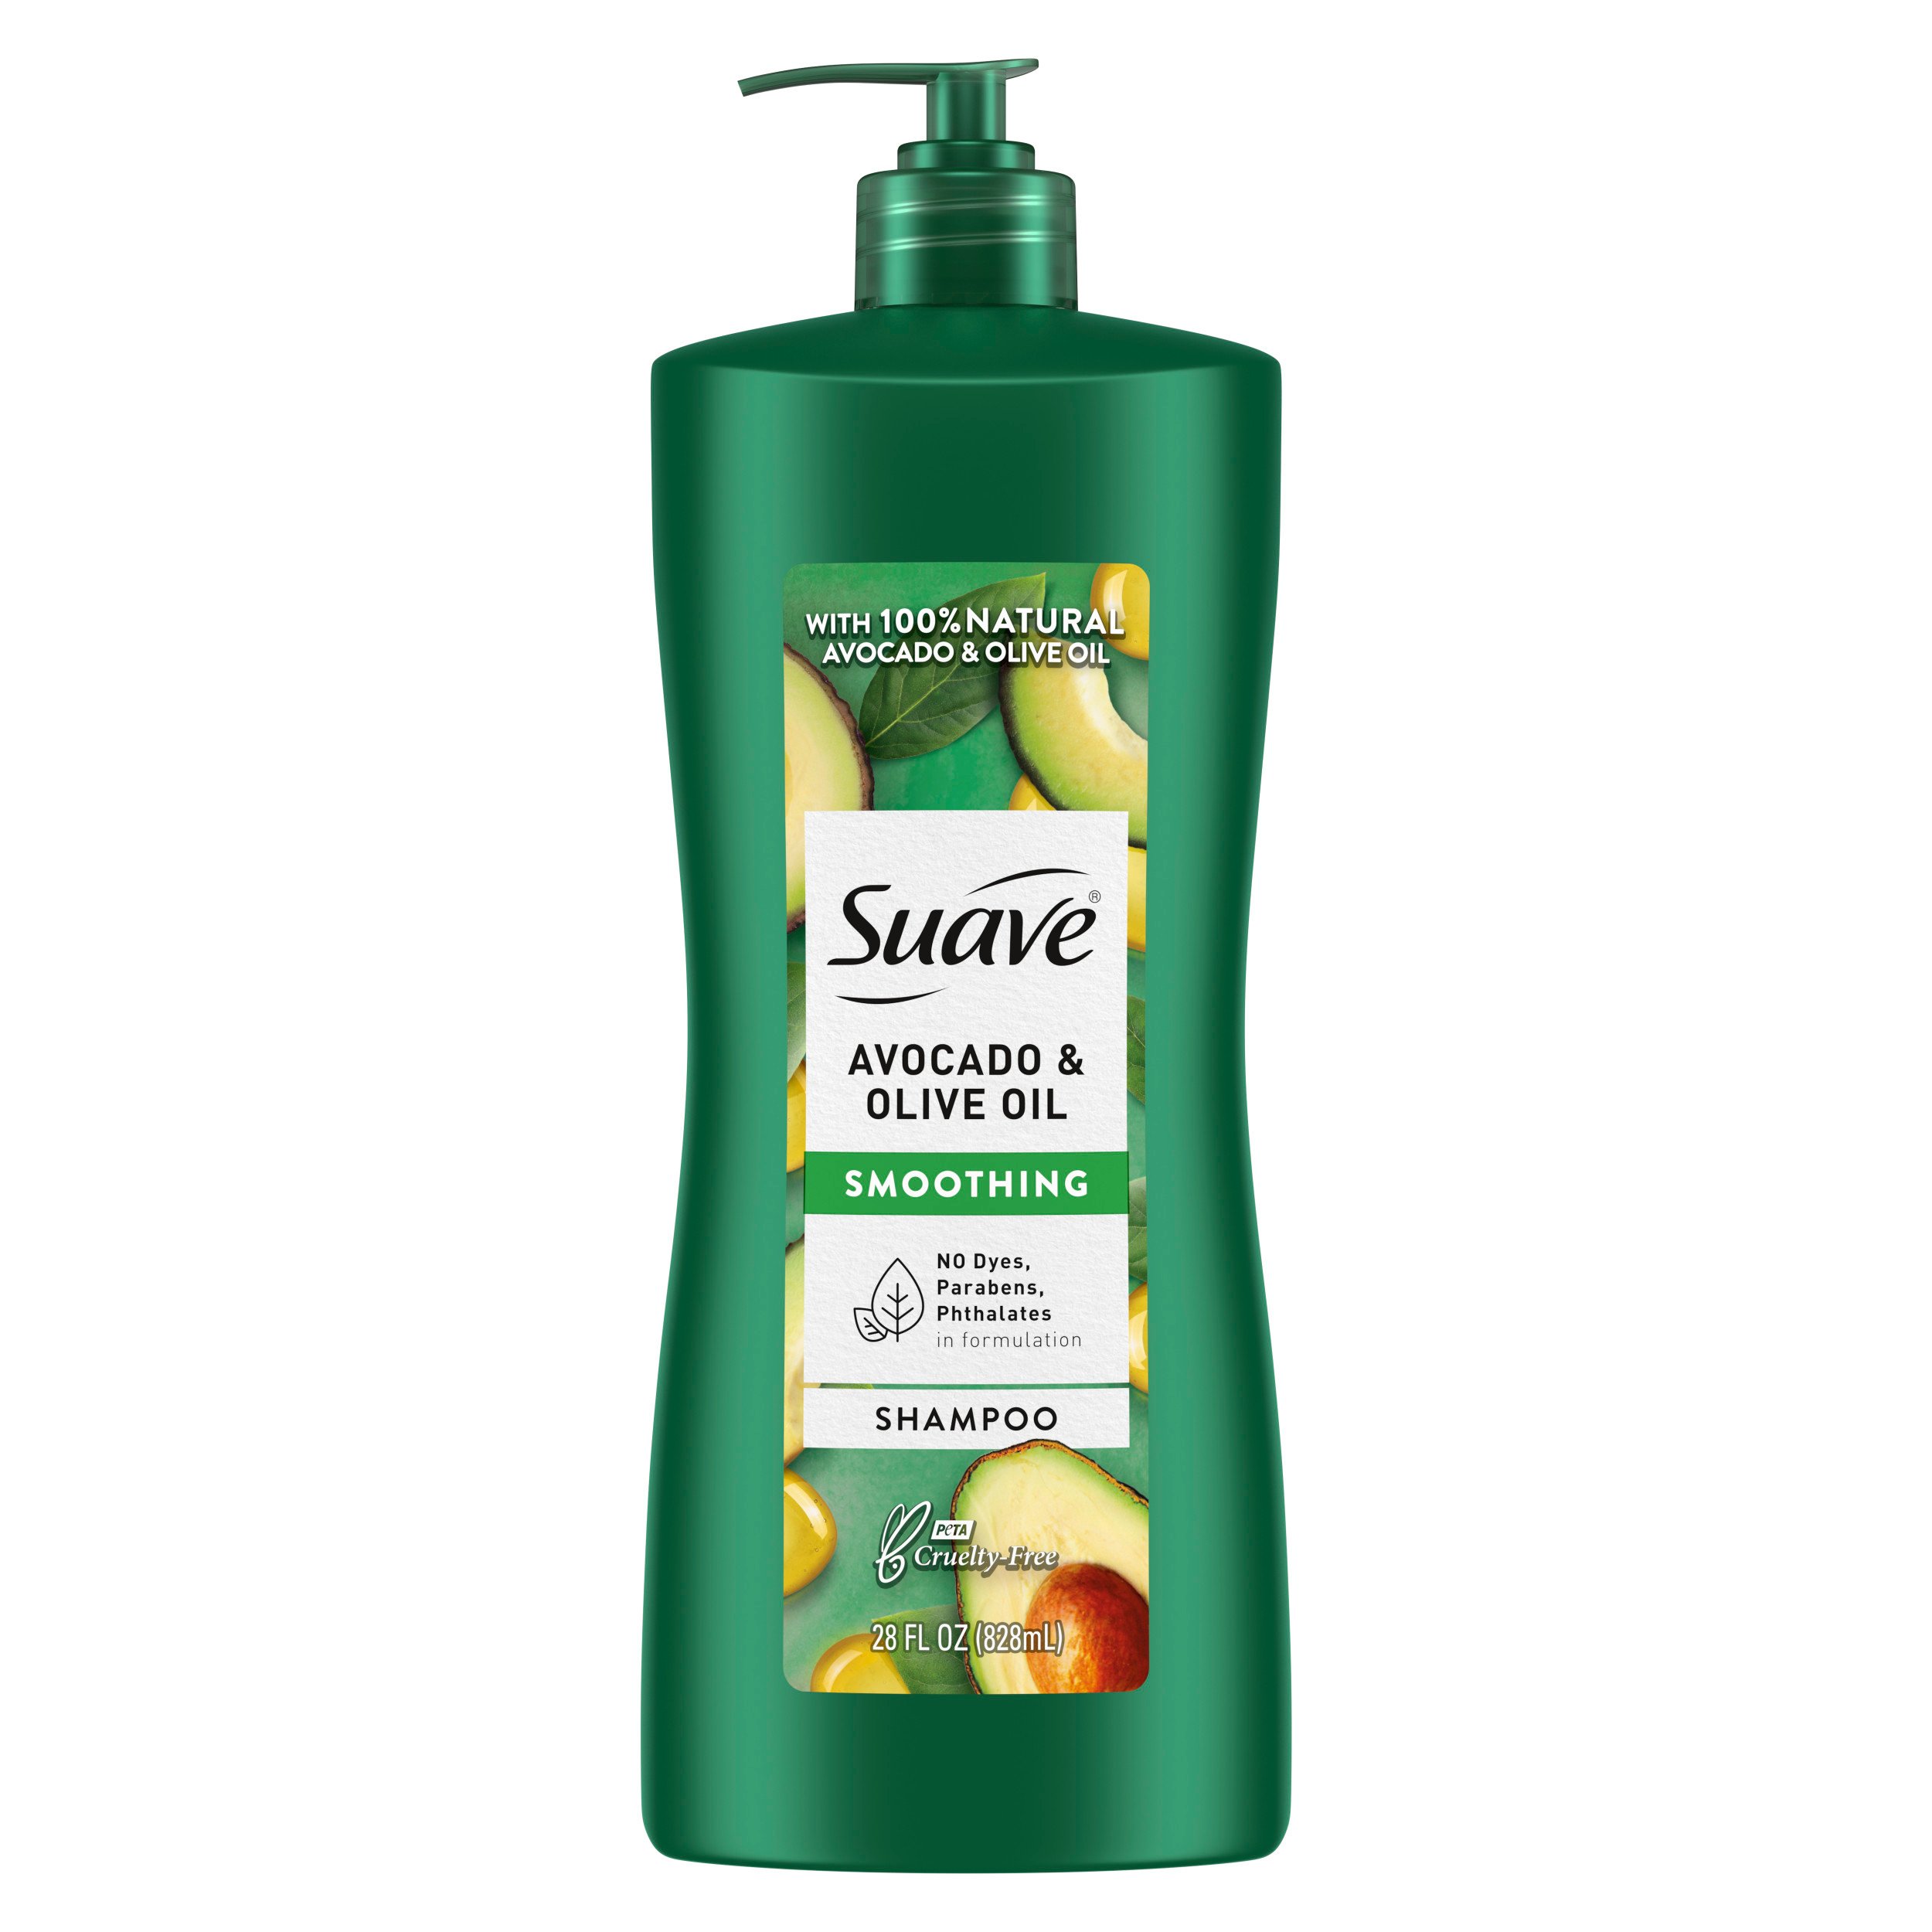 Suave Avocado Olive Oil Shampoo - Shop Shampoo & at H-E-B